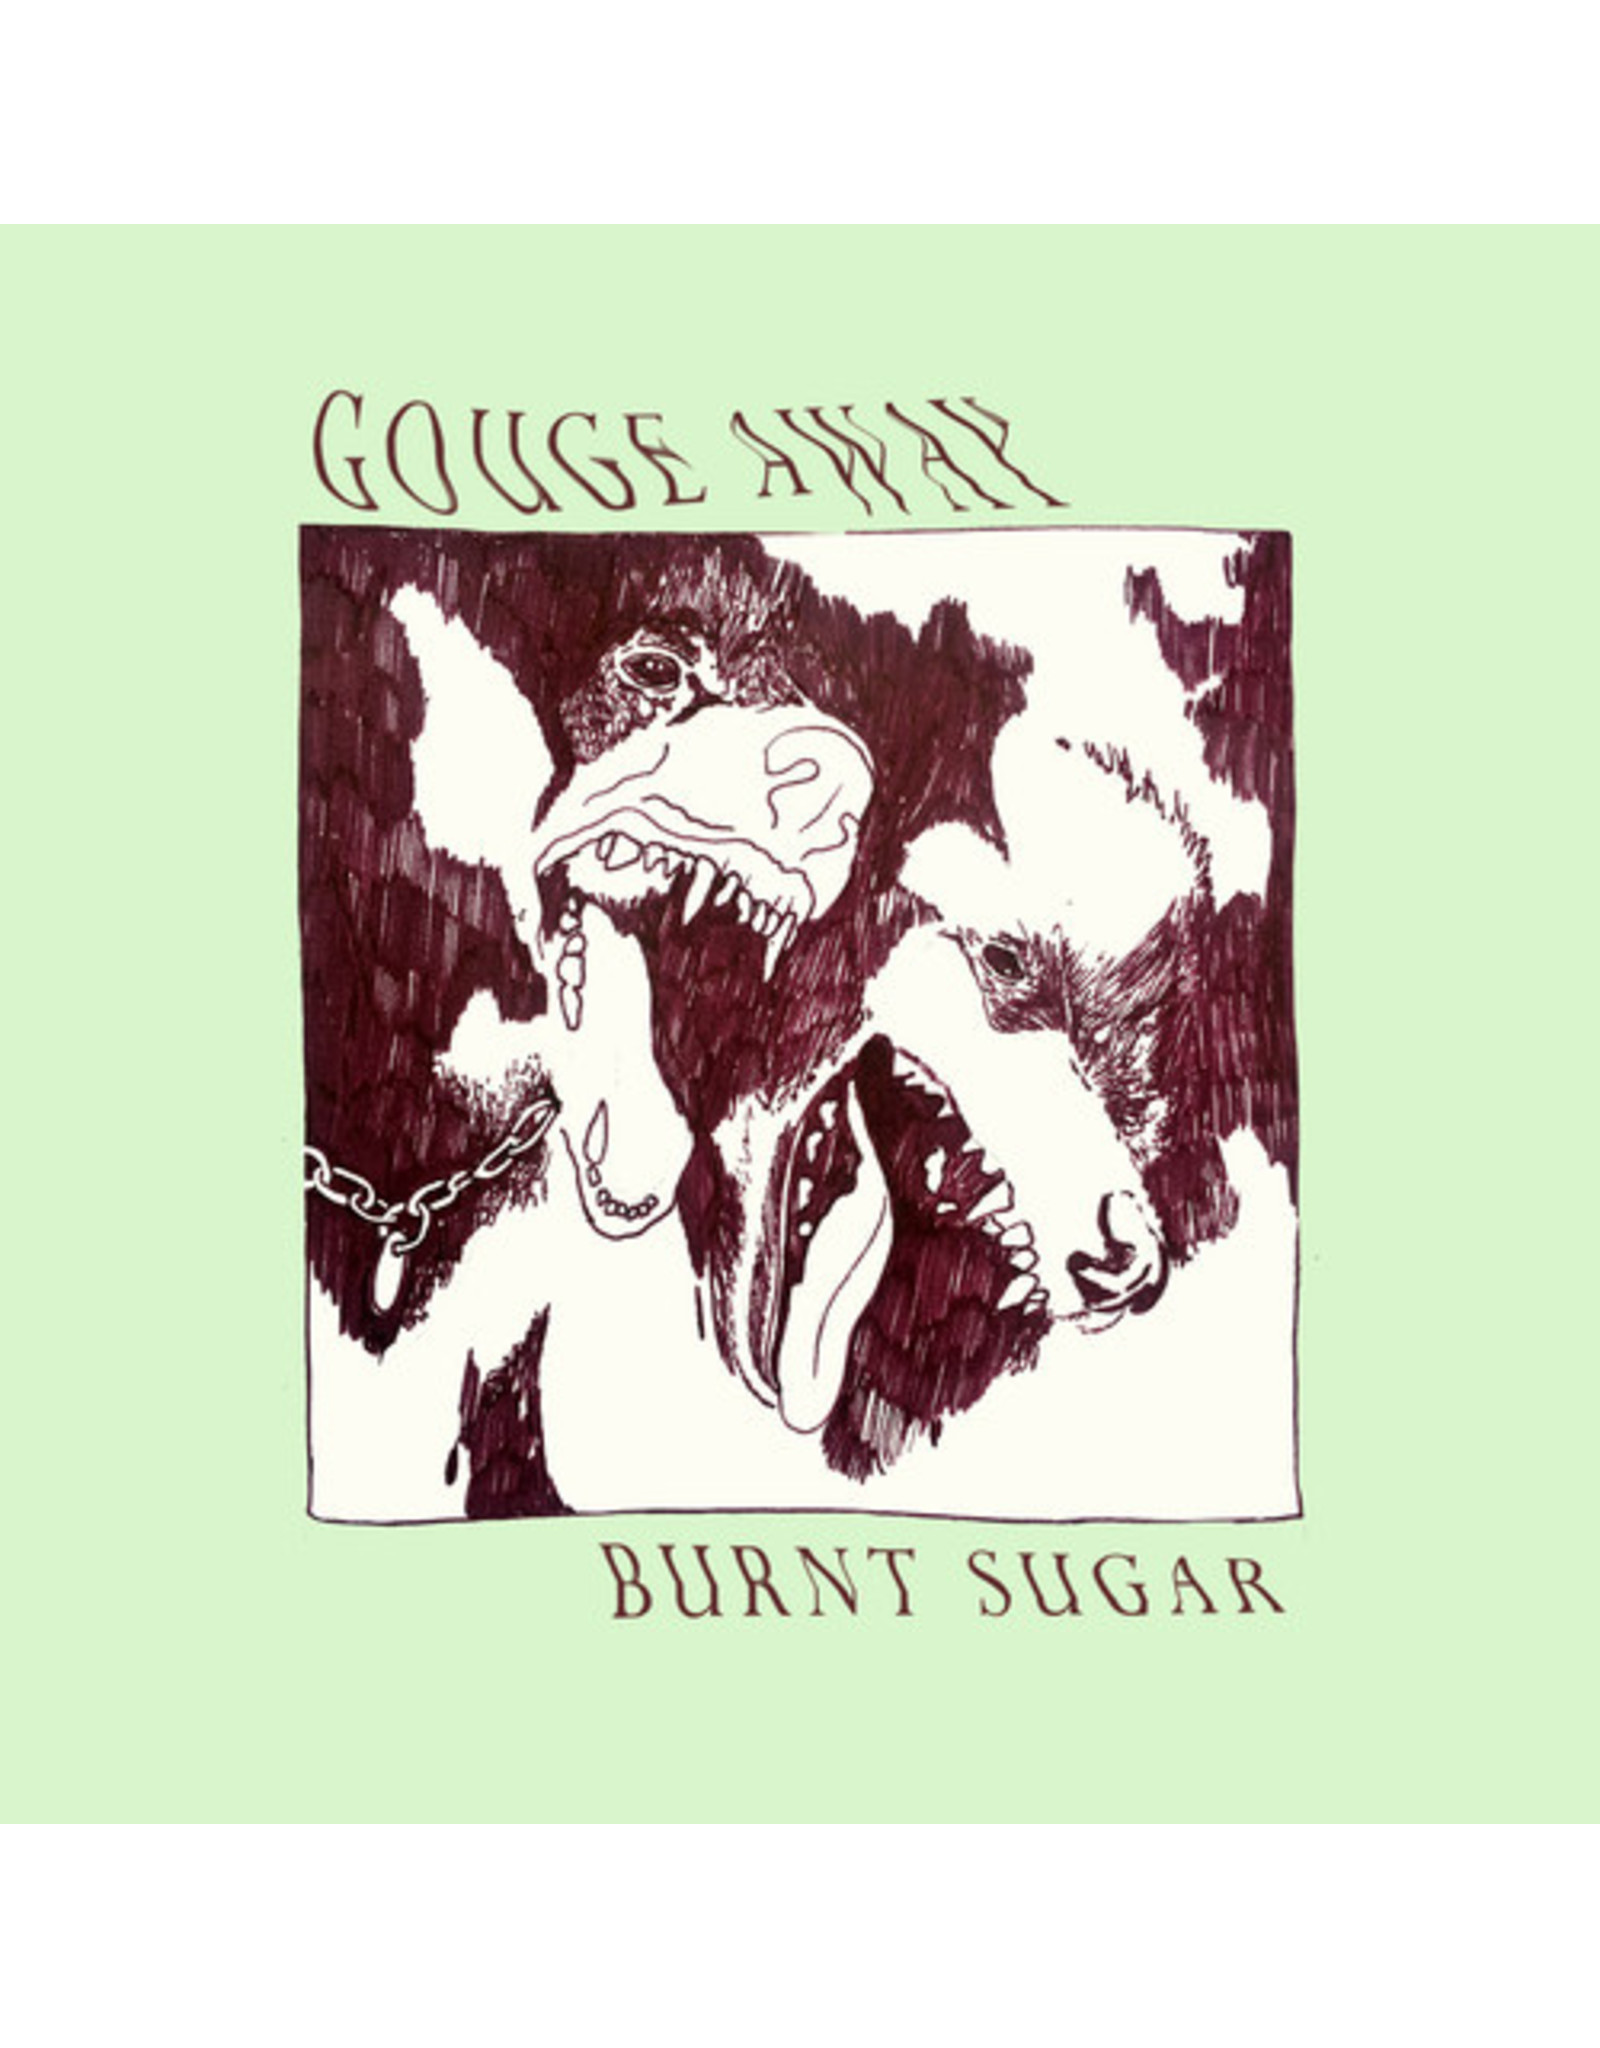 New Vinyl Gouge Away - Burnt Sugar LP